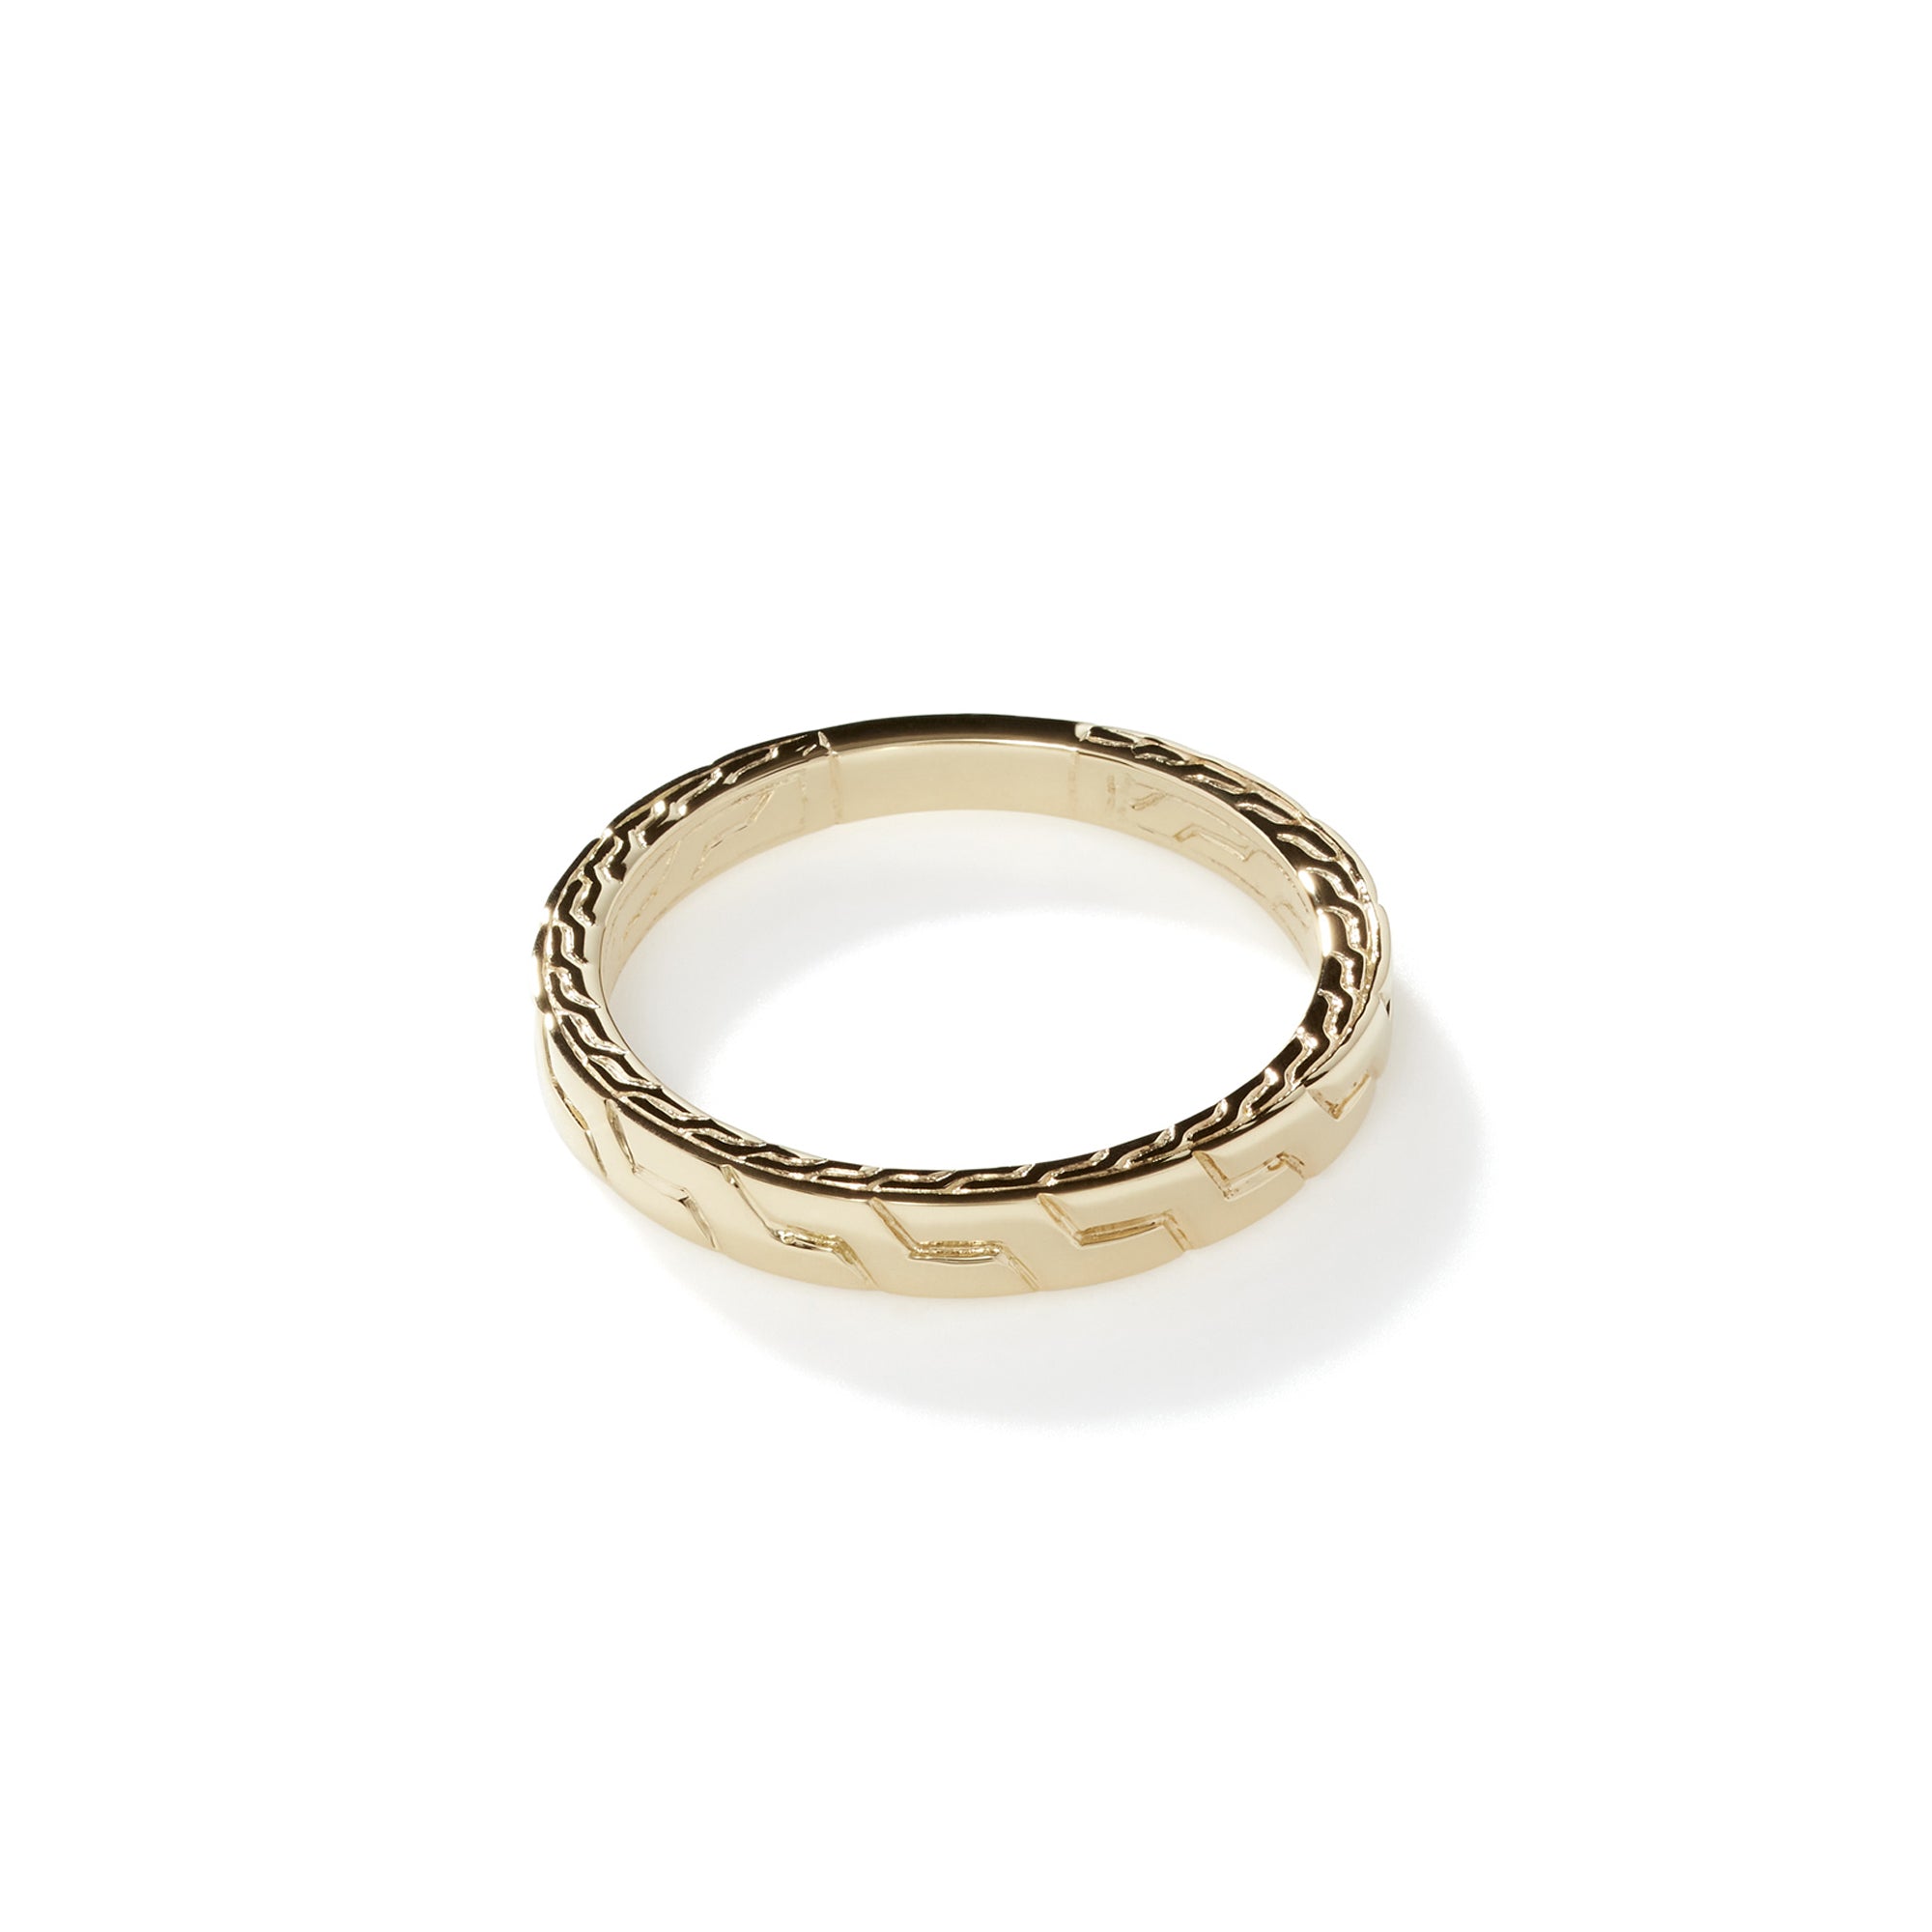 Carved Chain Band Ring, Gold, Slim|RMG90621 – John Hardy